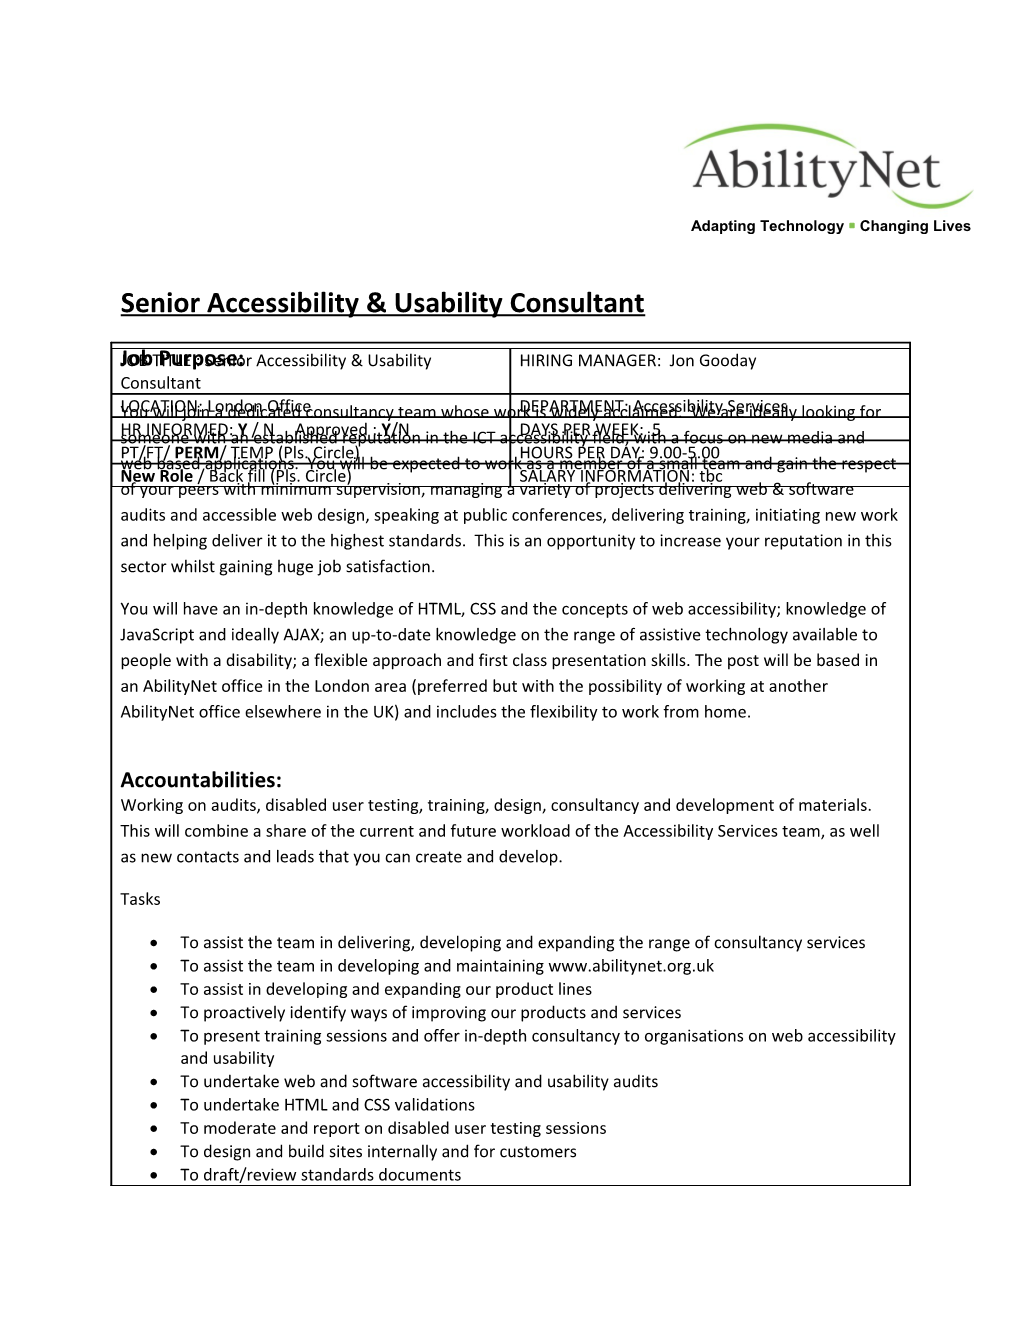 Senior Accessibility & Usability Consultant Job Description